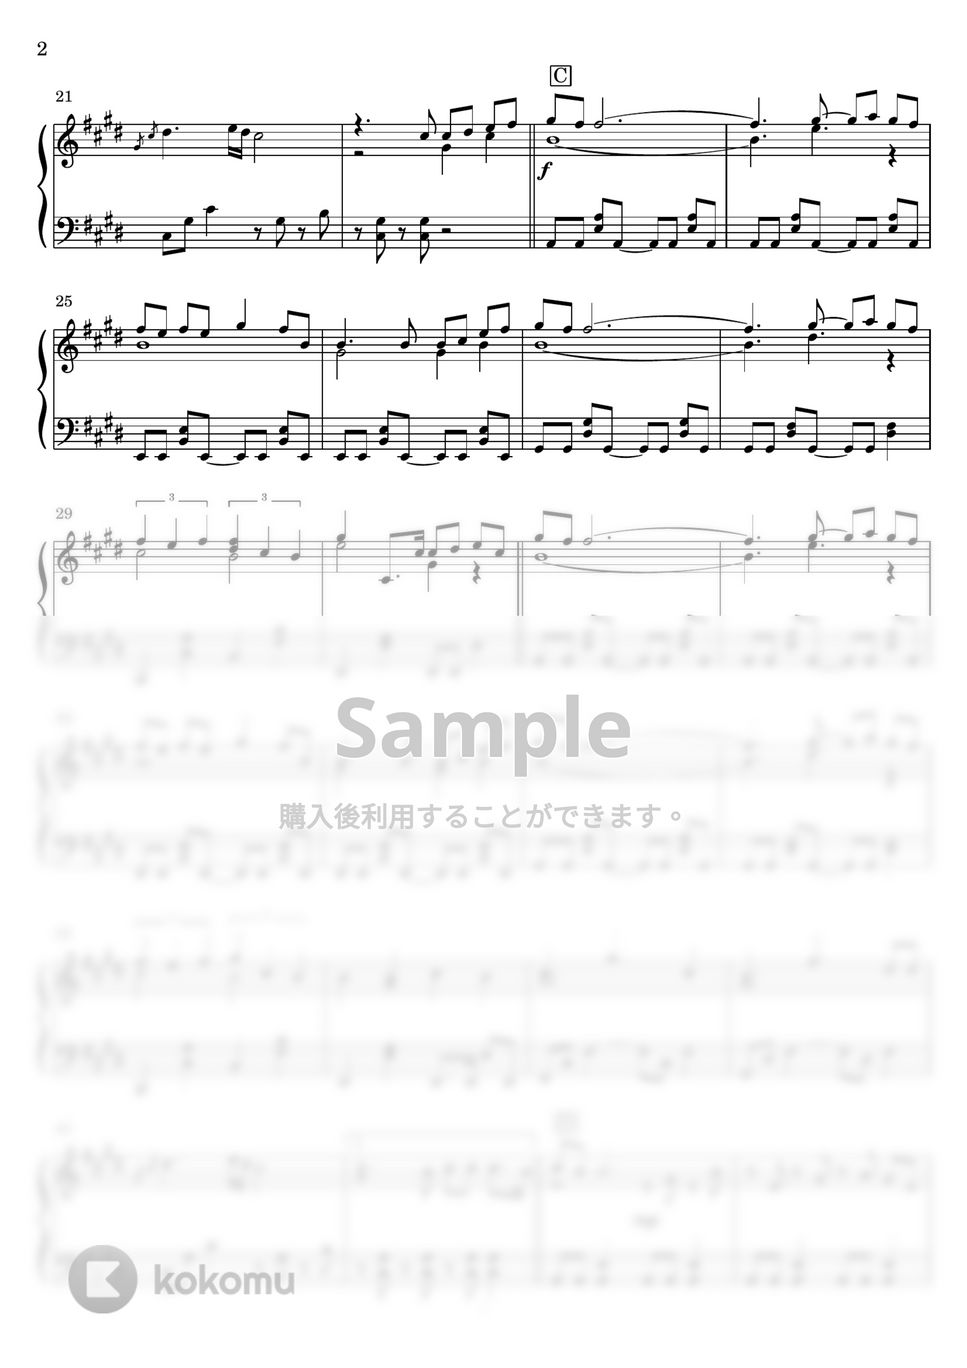 Vaundy - 恋風邪にのせて(フルver.) (ピアノソロ) by Miz